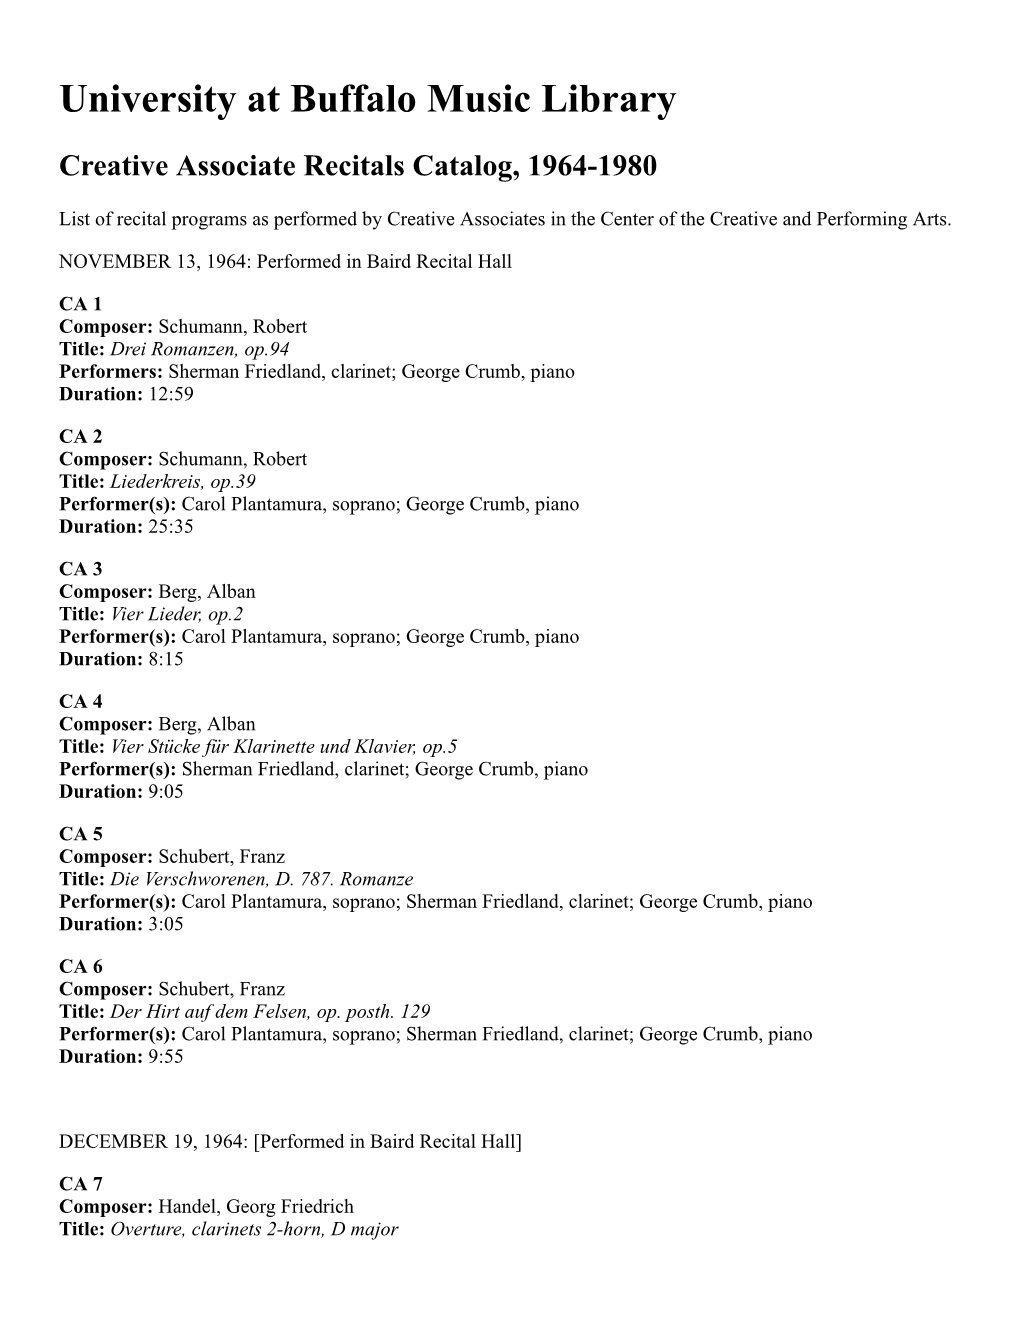 Creative Associate Recitals Catalog 1964 to 1980